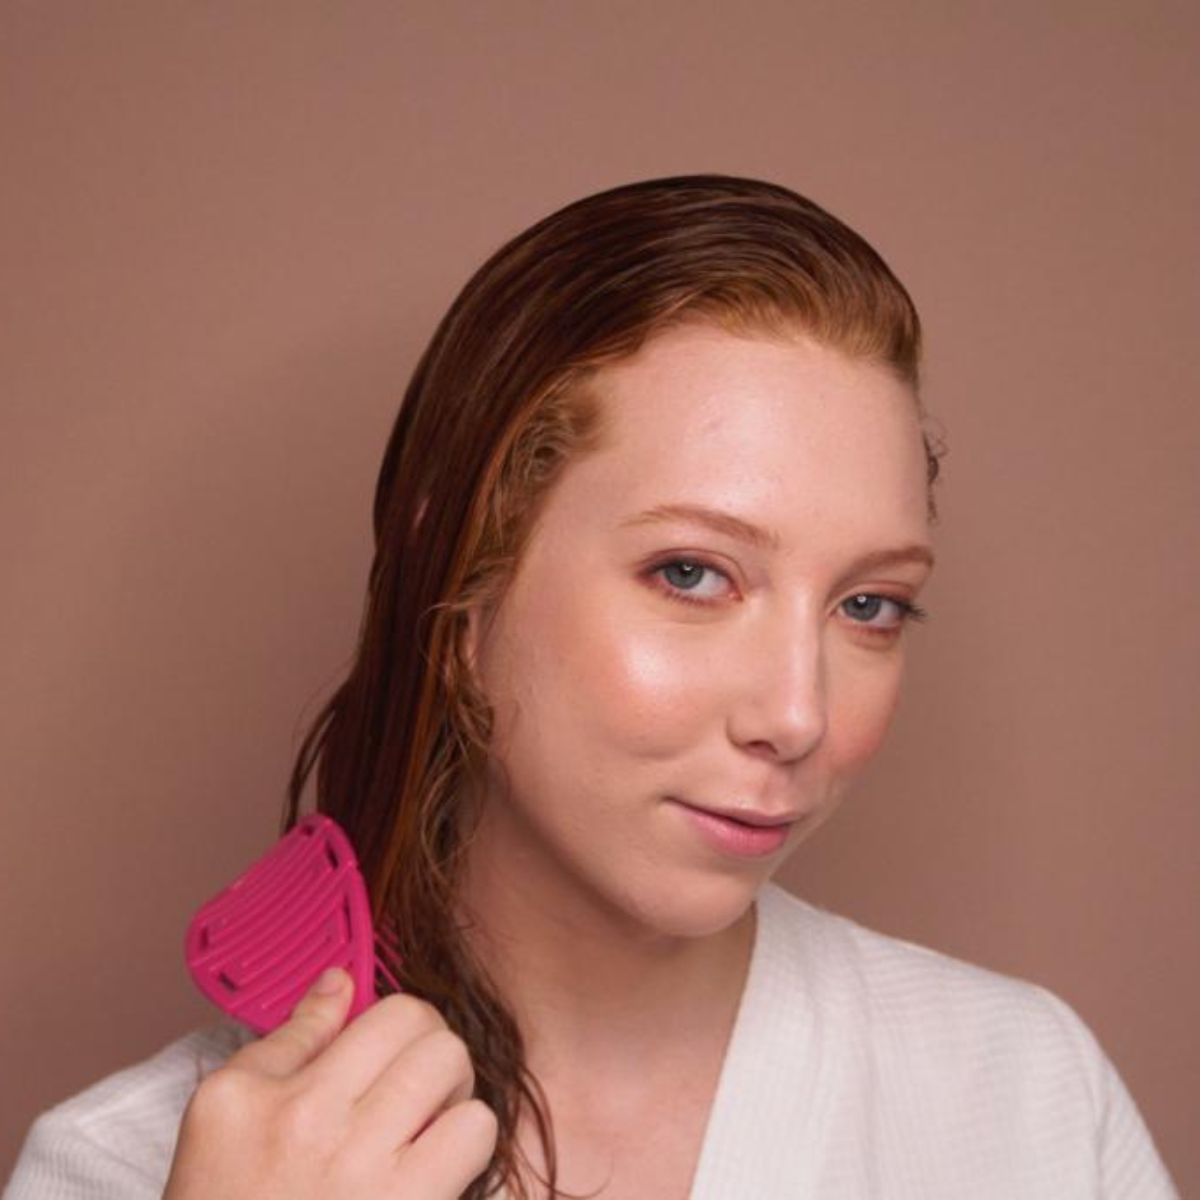 Dompel Maya Hair Brush Set - 4 Piece Set (Green, Pink, Purple, Black) - Antistatic Brush for All Hair Types.